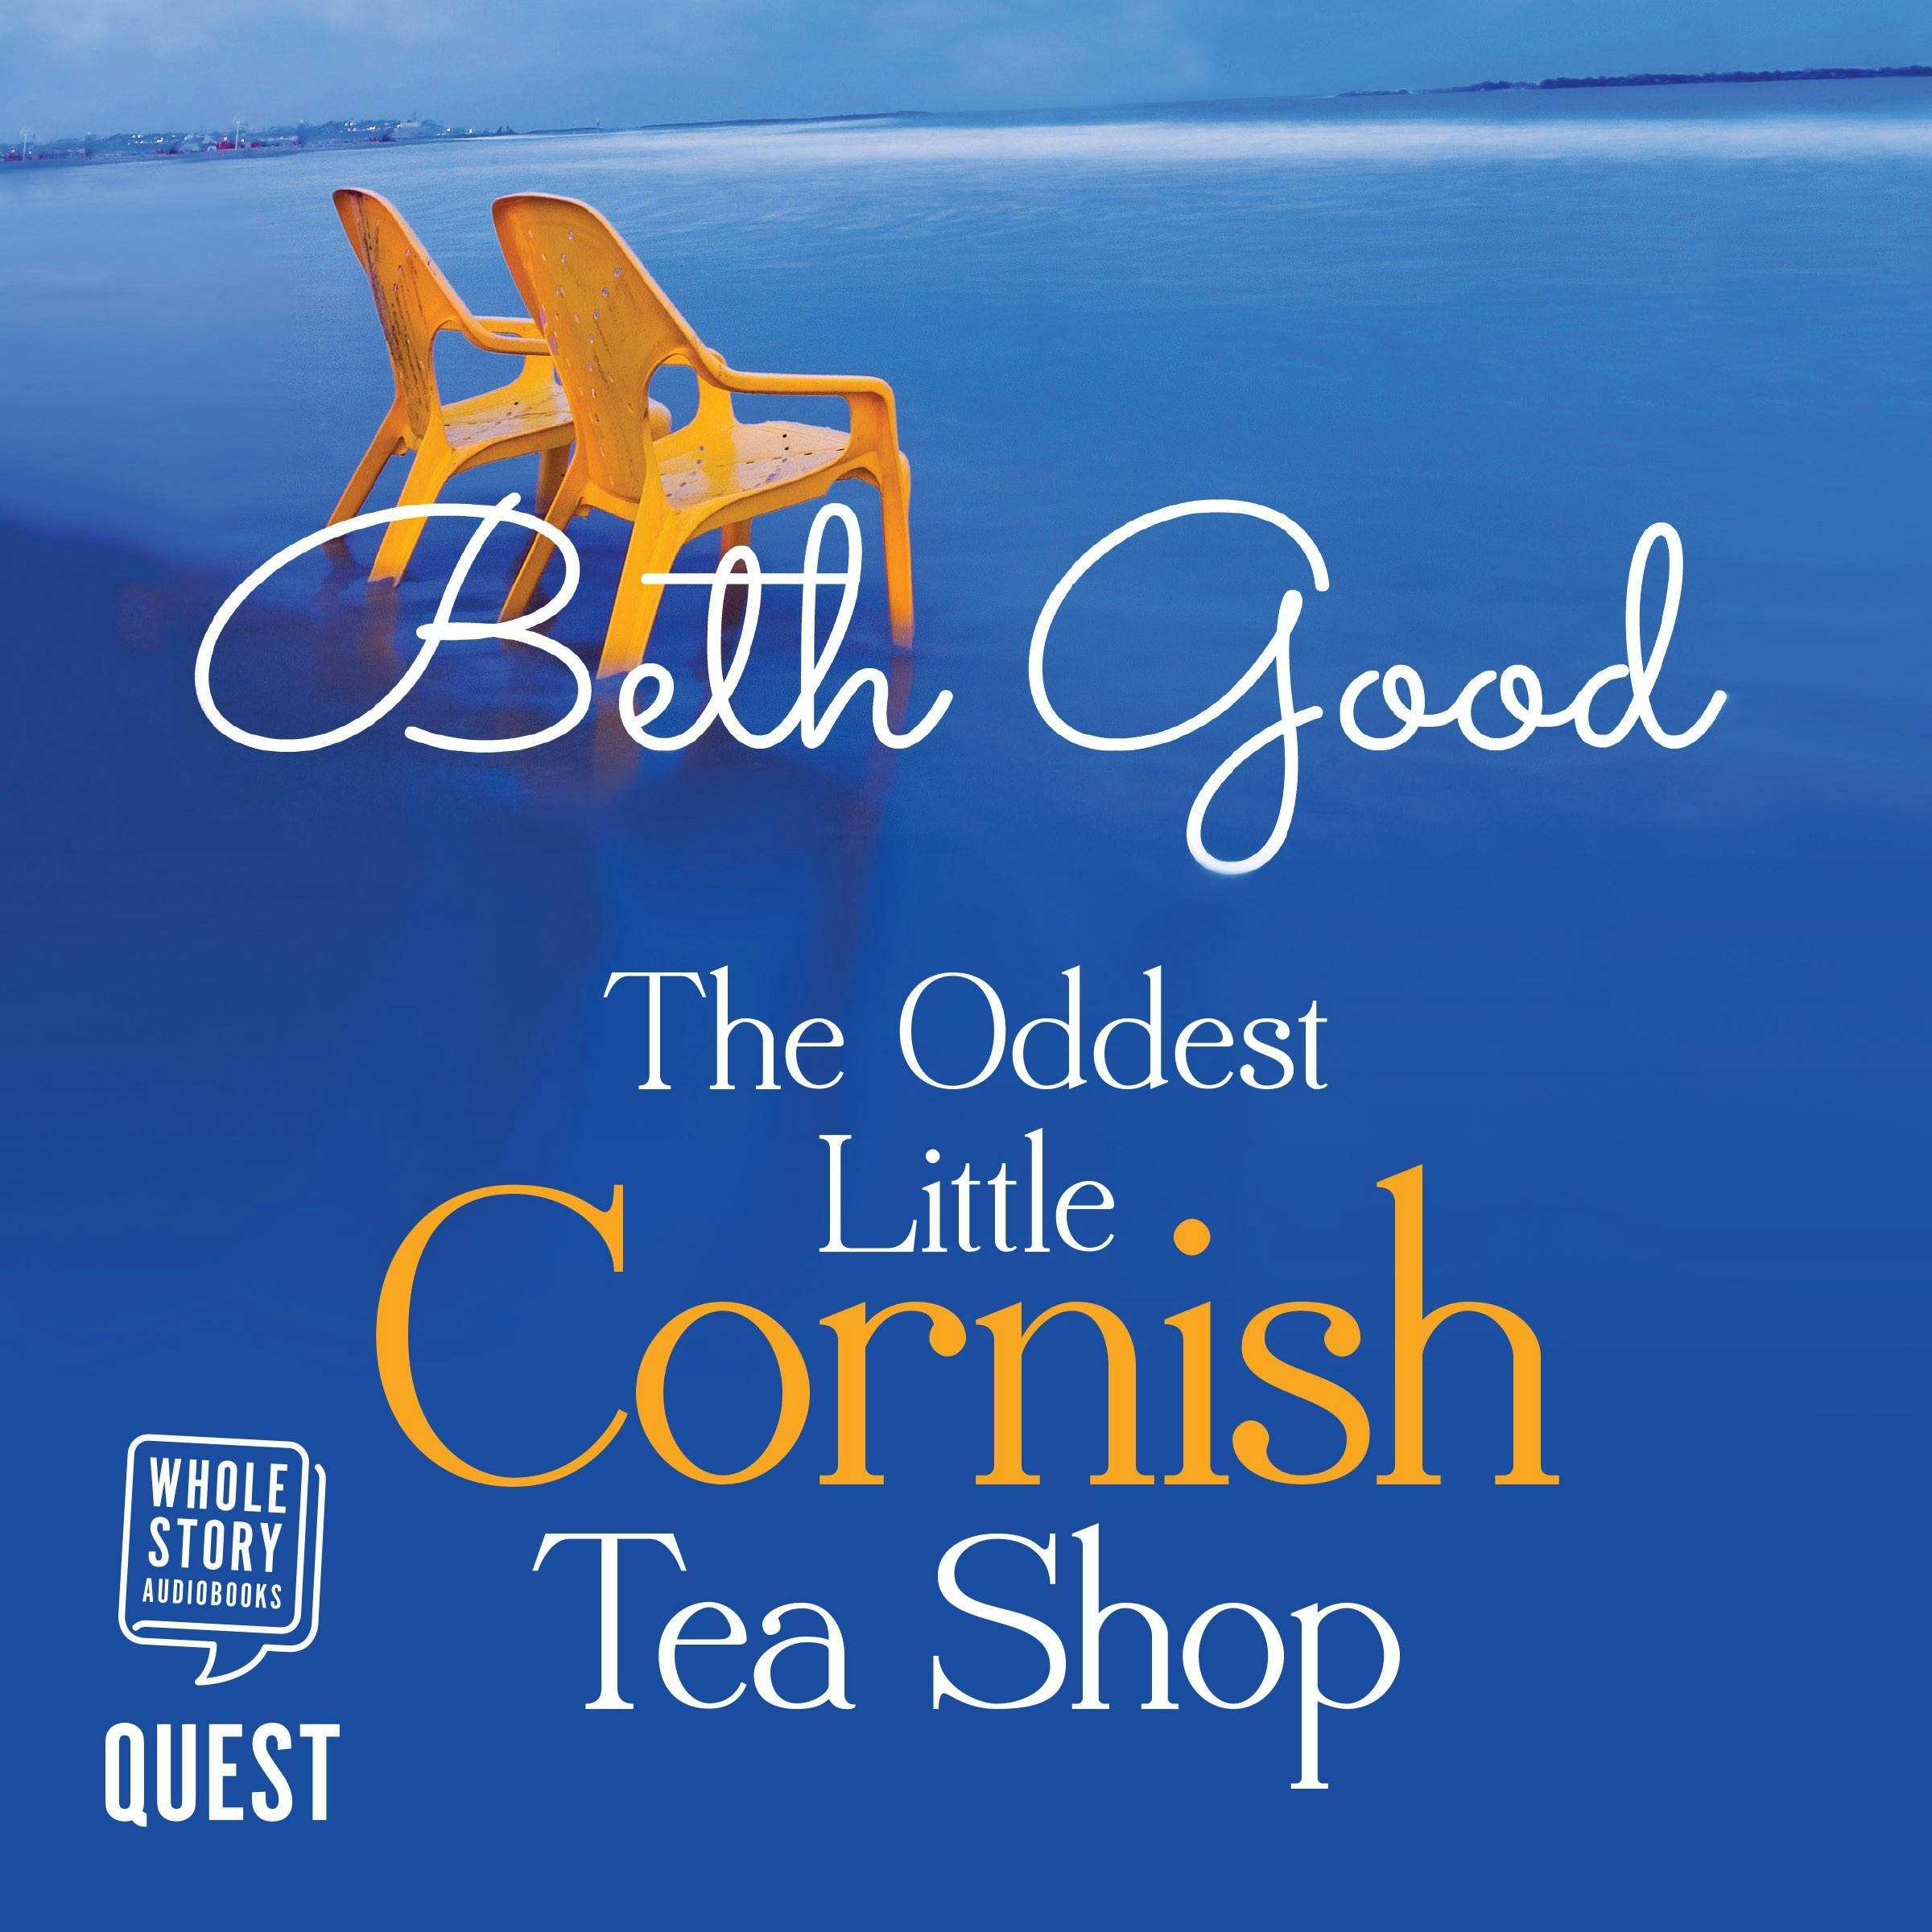 The Oddest Little Cornish Tea Shop - Beth Good